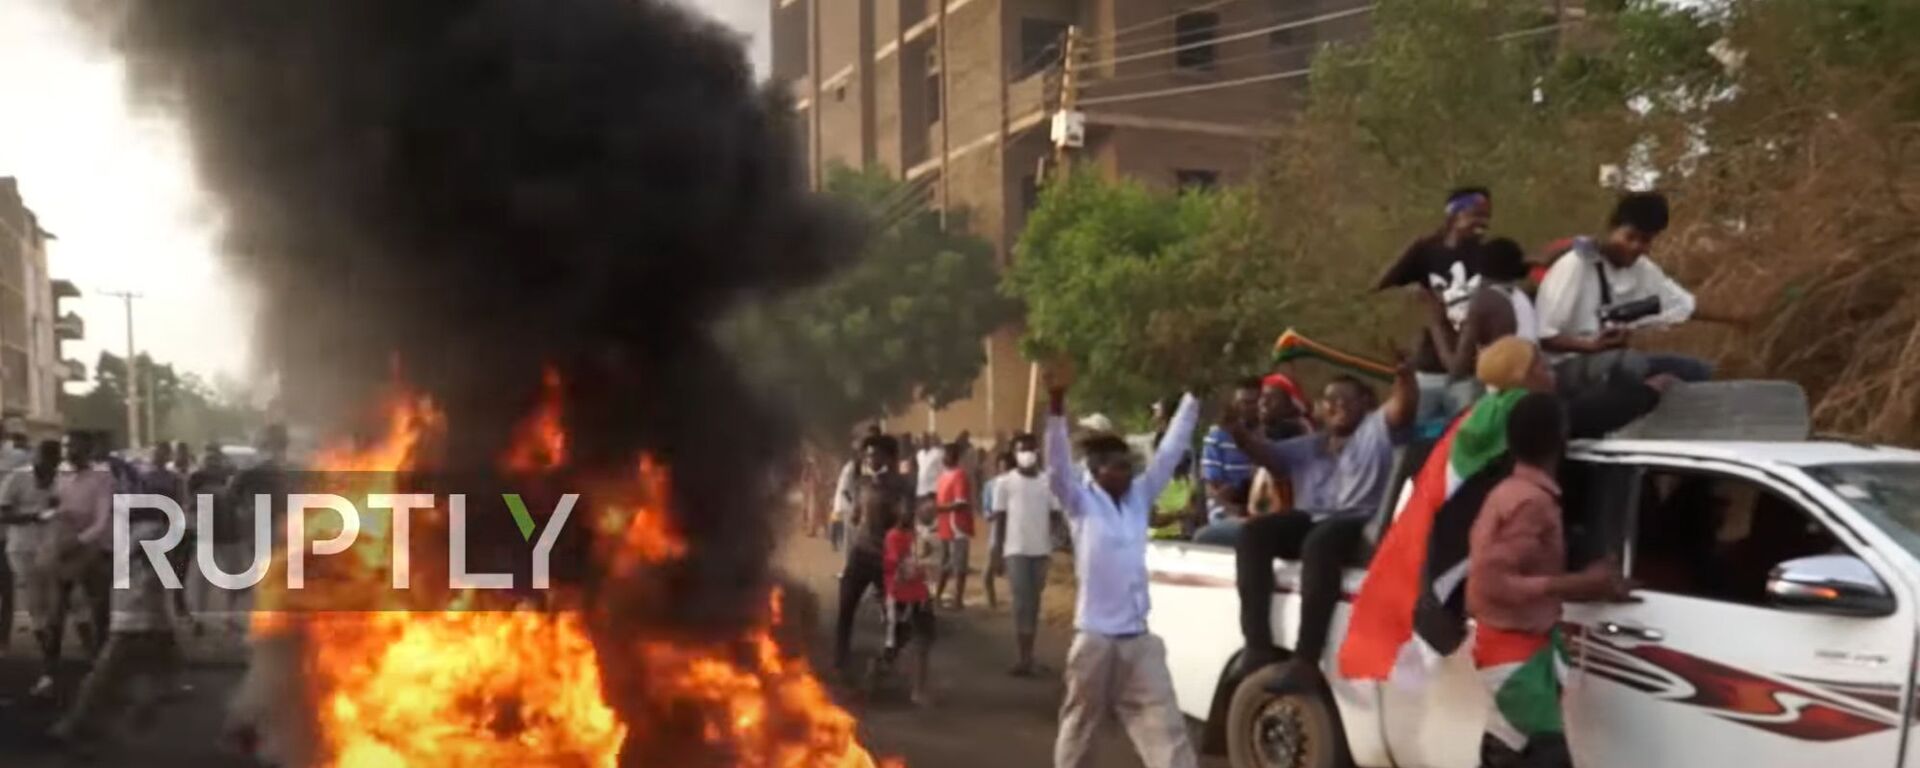 Sudan: Anti-govt protesters demand justice for 2019 massacre victims in Khartoum - Sputnik Moldova, 1920, 04.06.2021